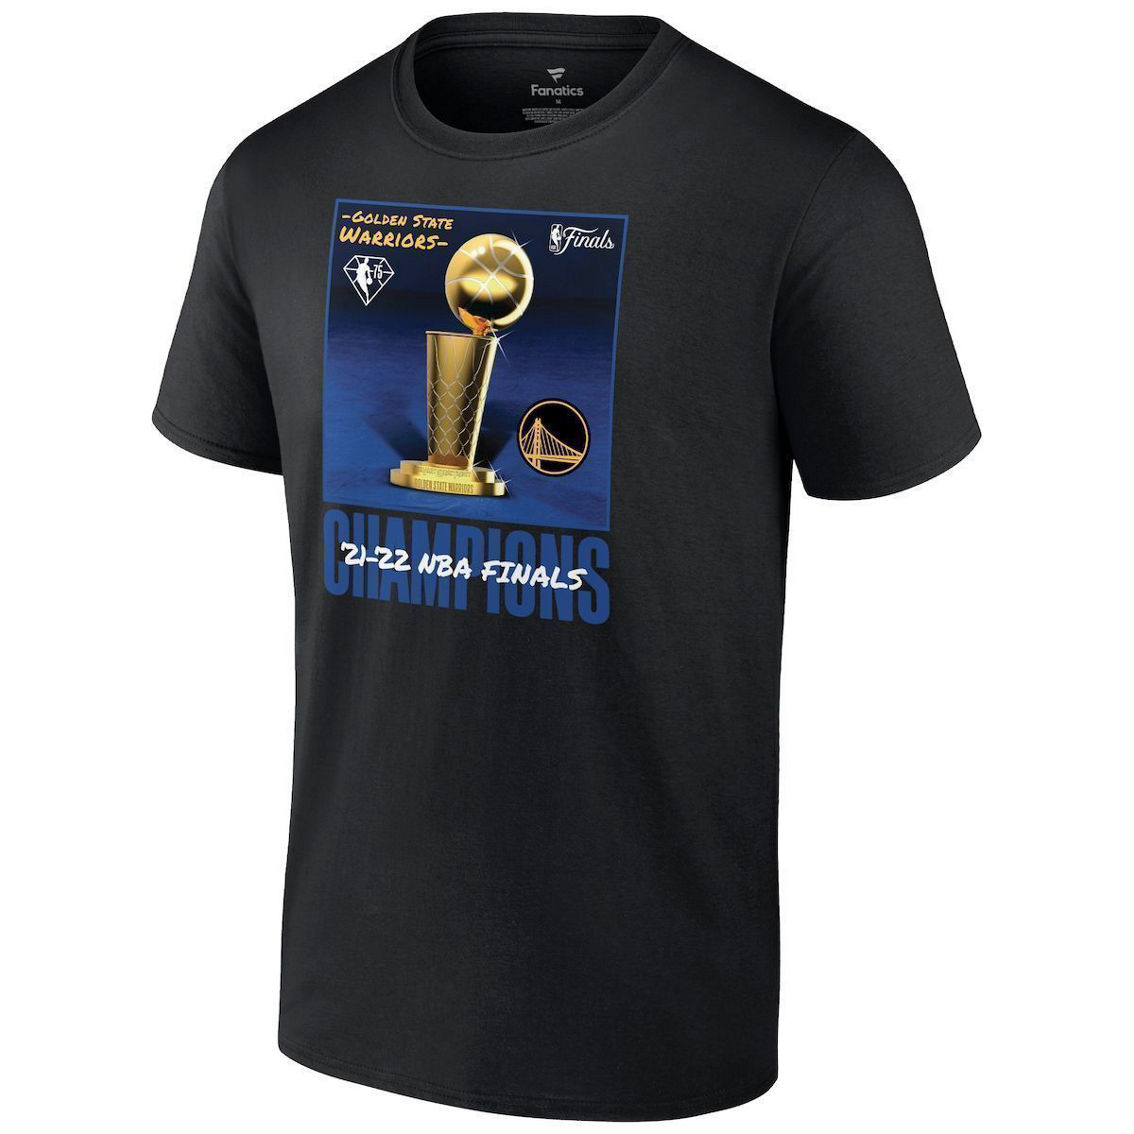 Fanatics Branded Men's Black Golden State Warriors 2022 NBA Finals s 75th Anniversary Jumper Trophy T-Shirt - Image 3 of 4